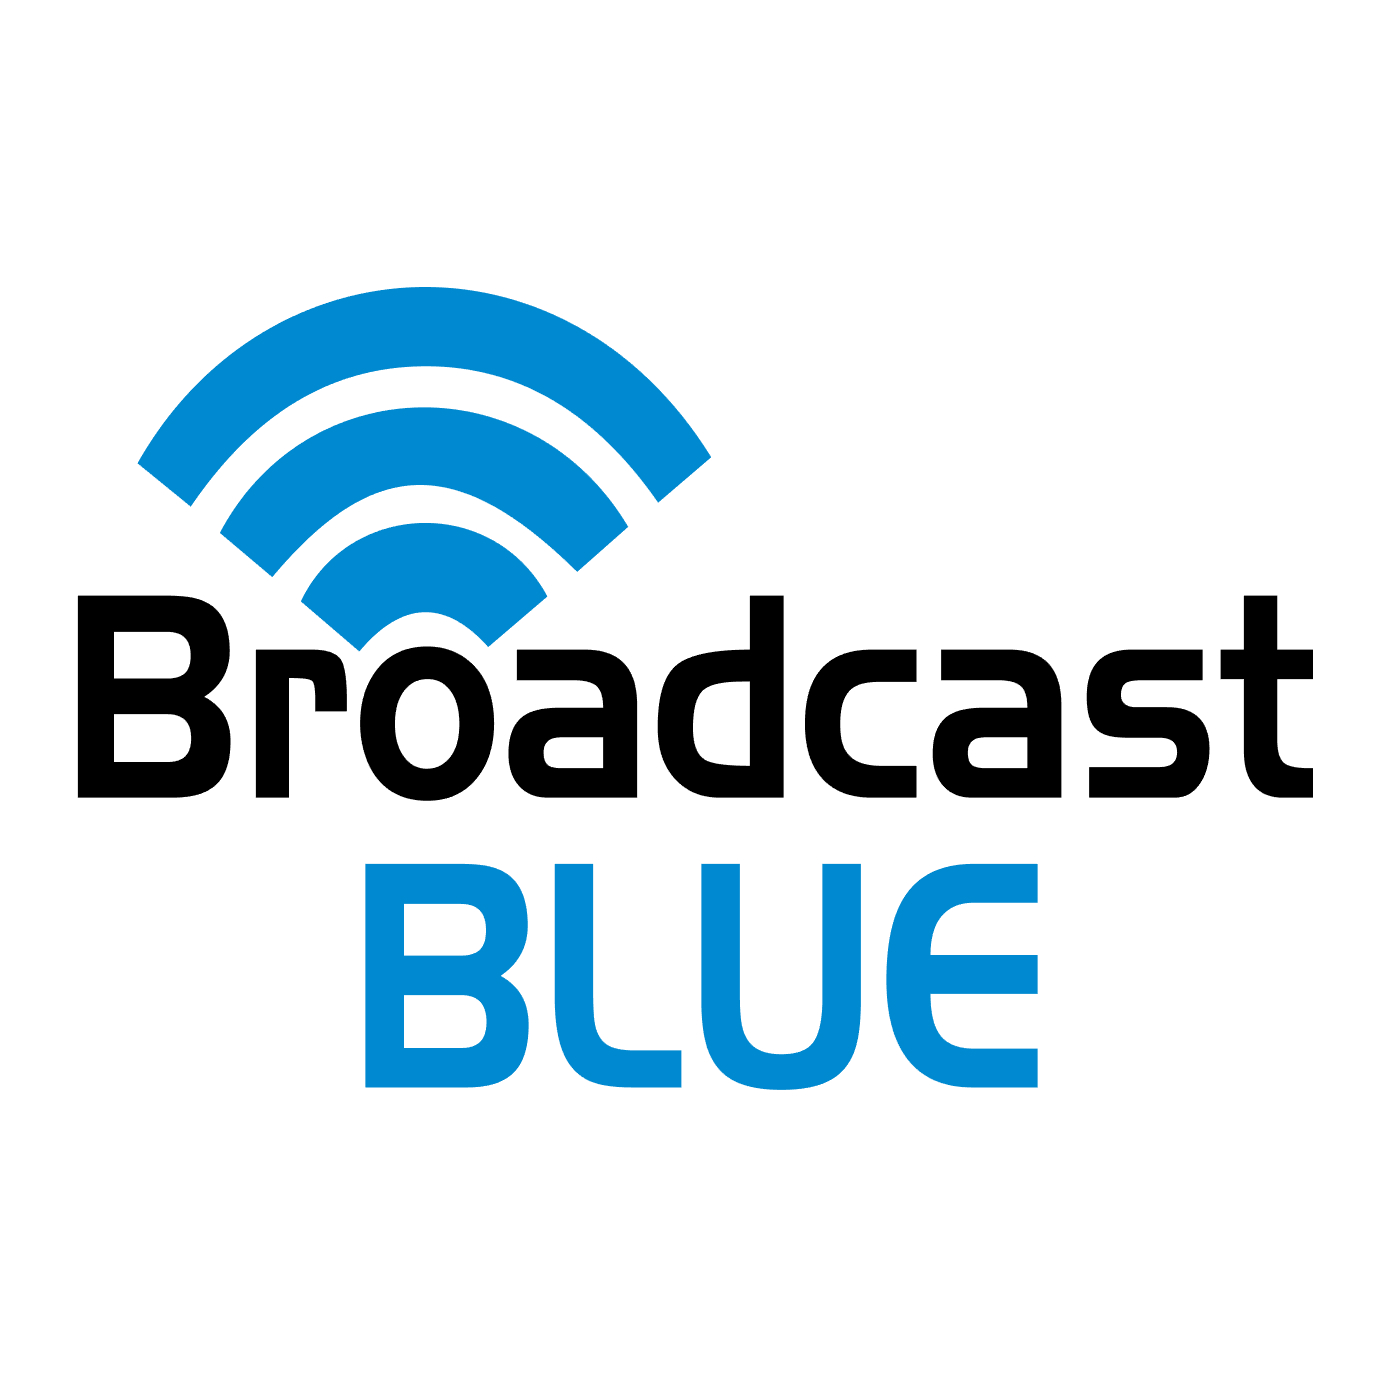 Broadcast BLUE